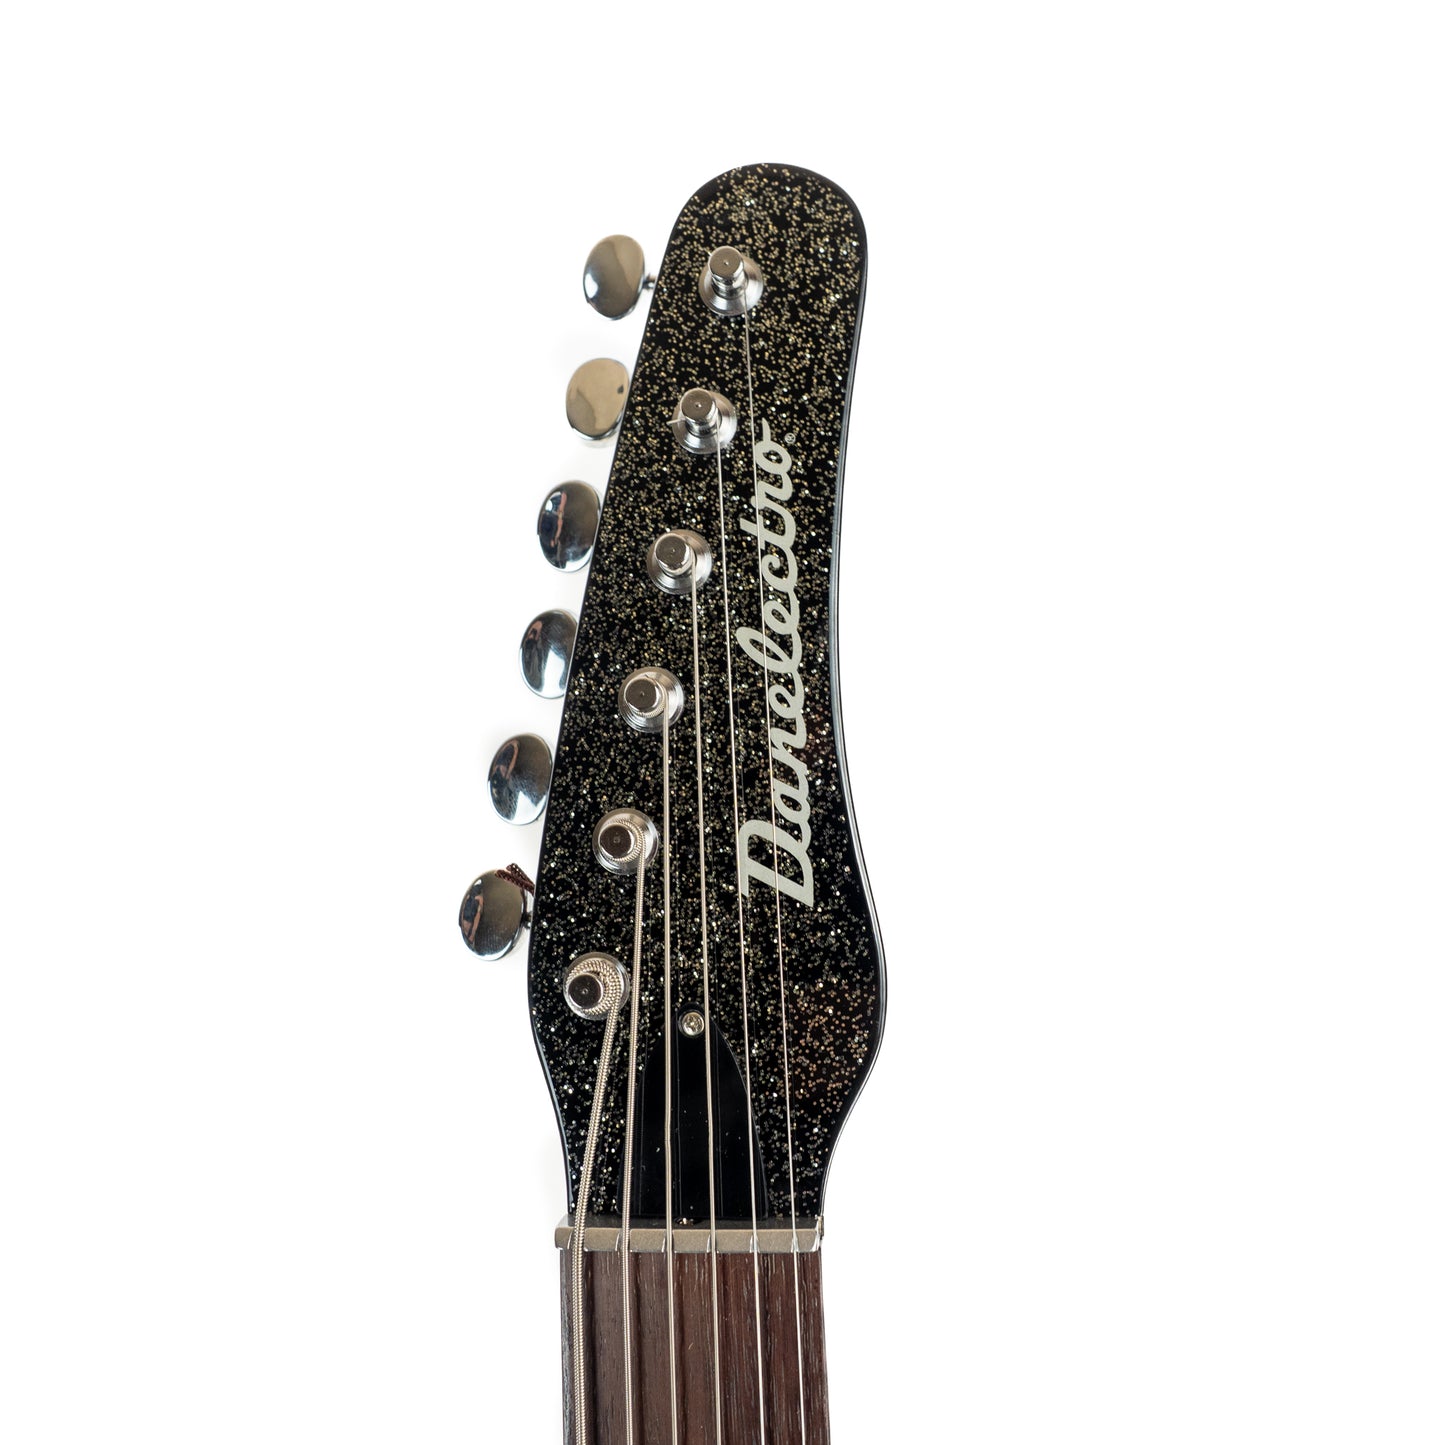 Danelectro 56 Baritone Black Metalflake electric guitar 6lbs, 11 ounces